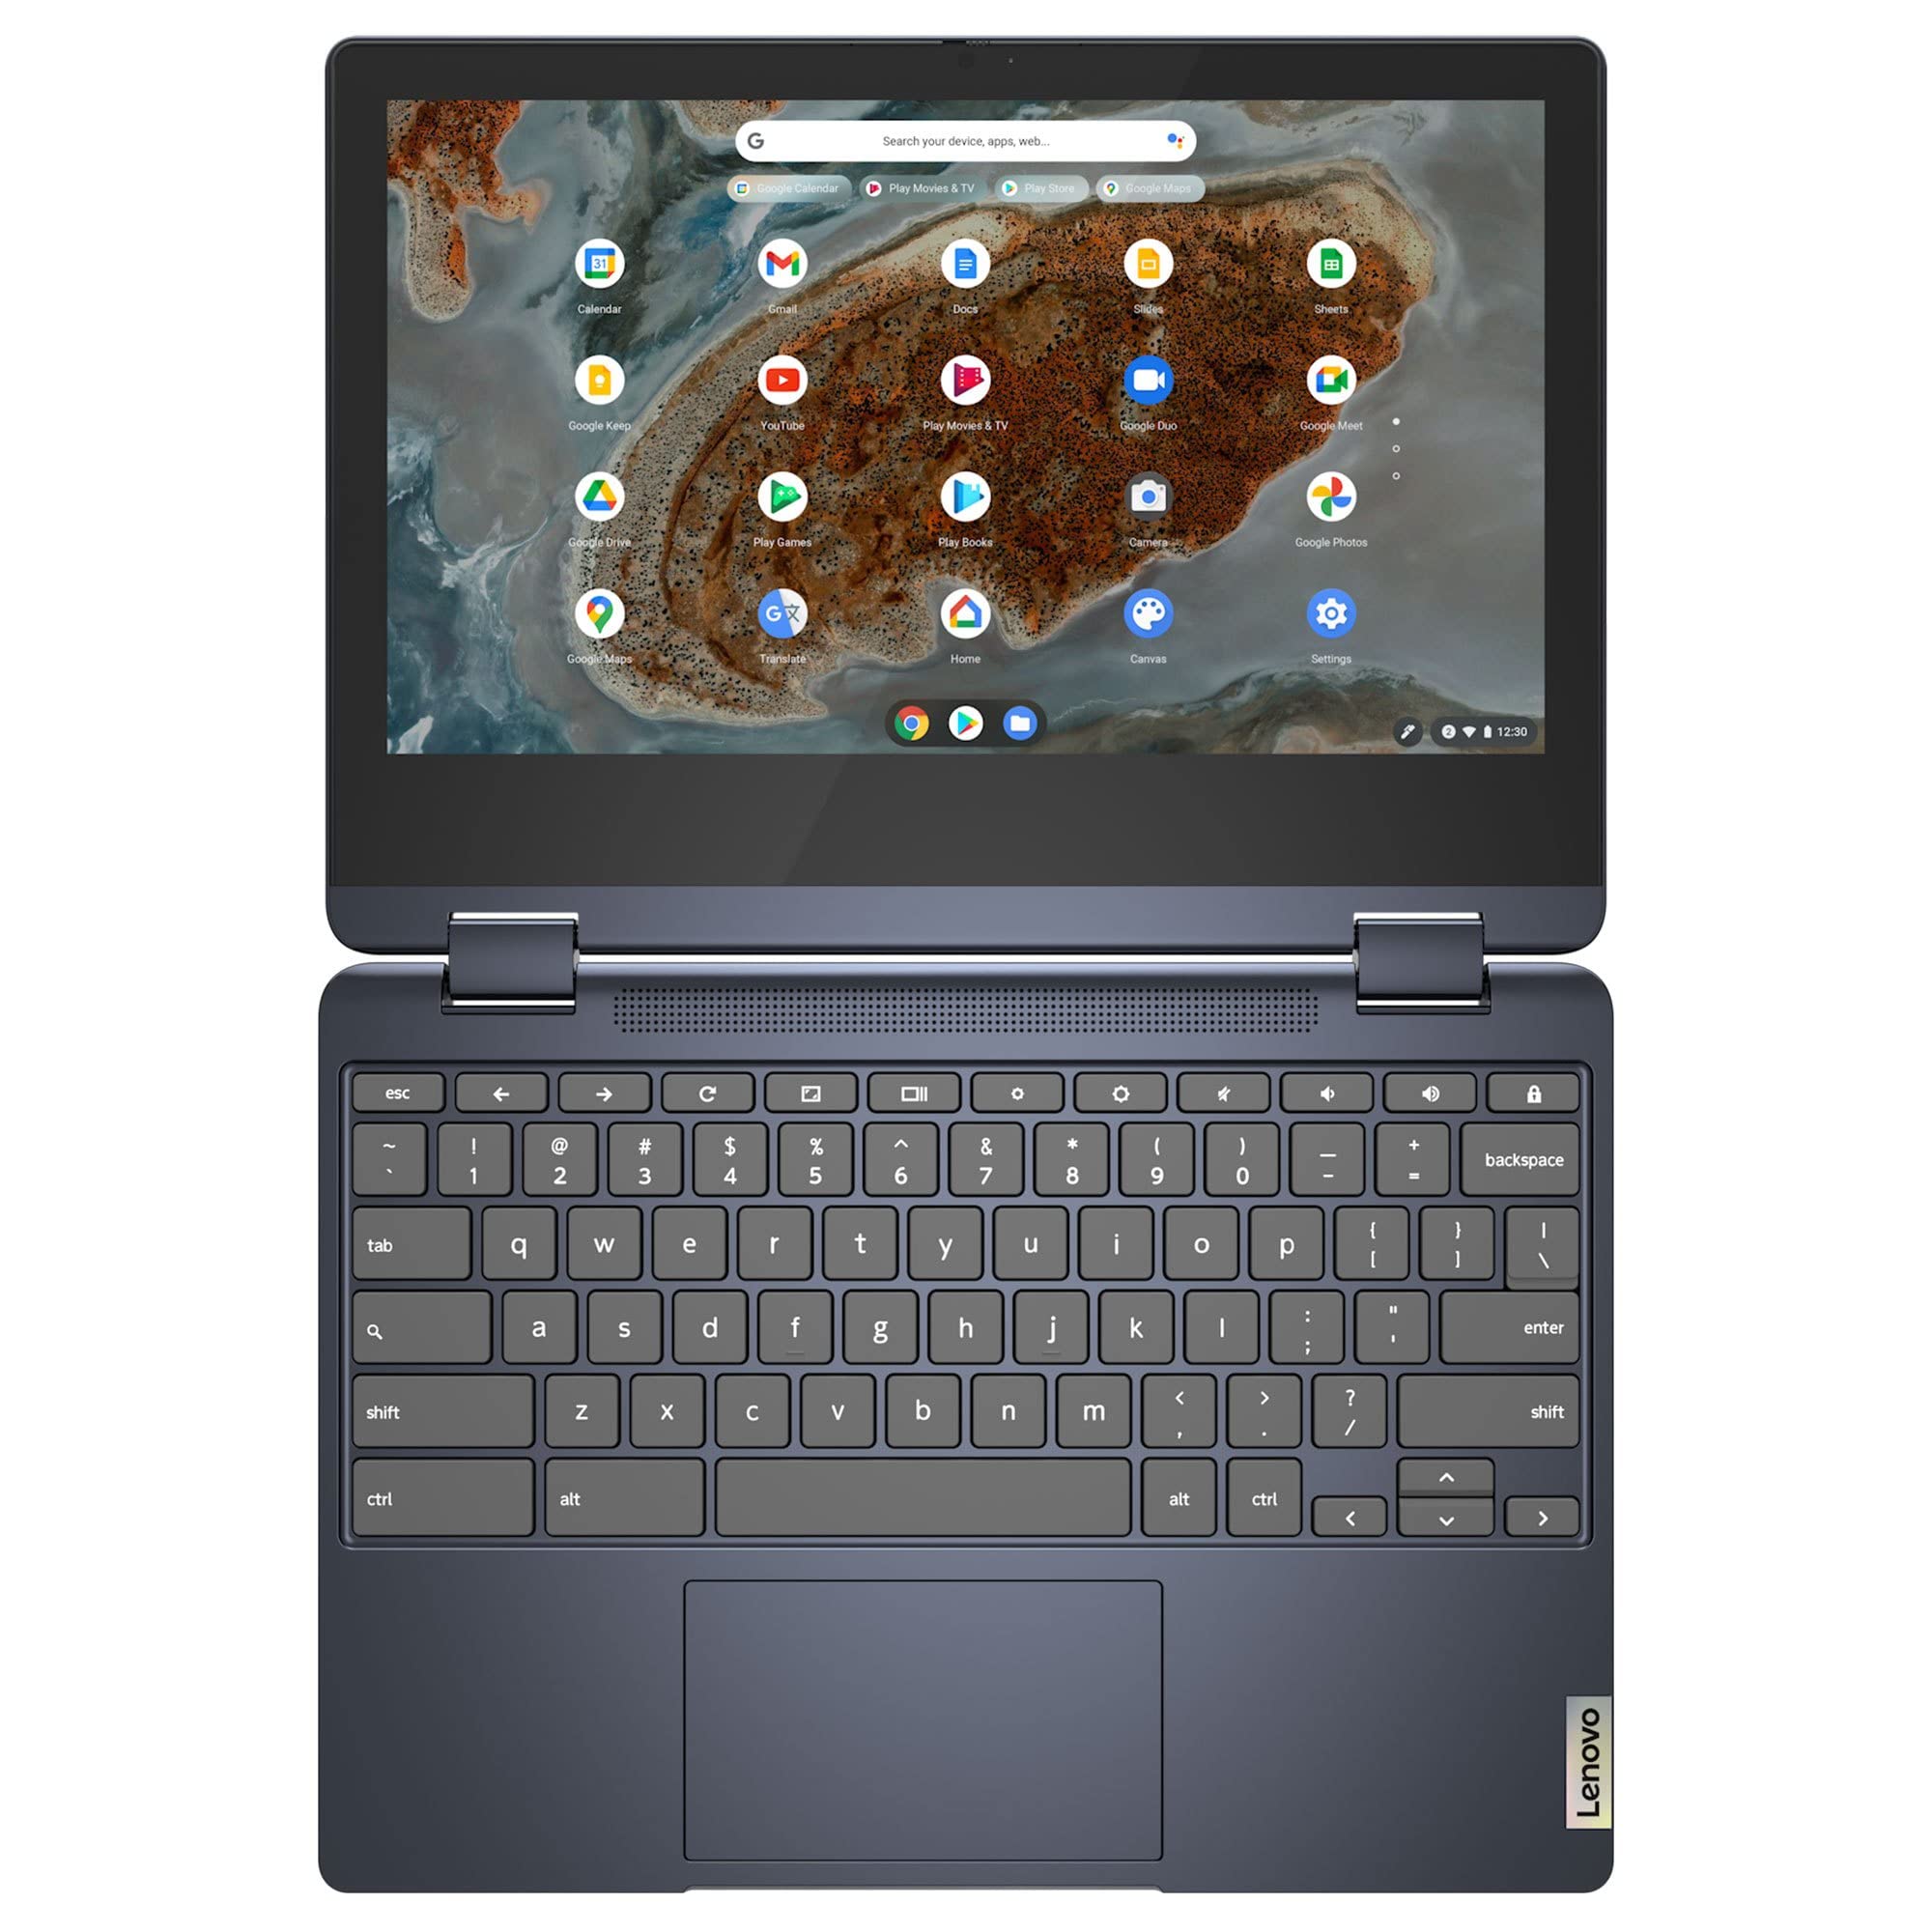 Lenovo 2022 IdeaPad Flex 3 11.6" HD 2-in-1 Touchscreen Chromebook (8-Core MediaTek MT8183, 4GB RAM, 64GB eMMC, Stylus, Webcam) Flip Convertible Home Education Laptop, IST Computers Pen, Chrome OS